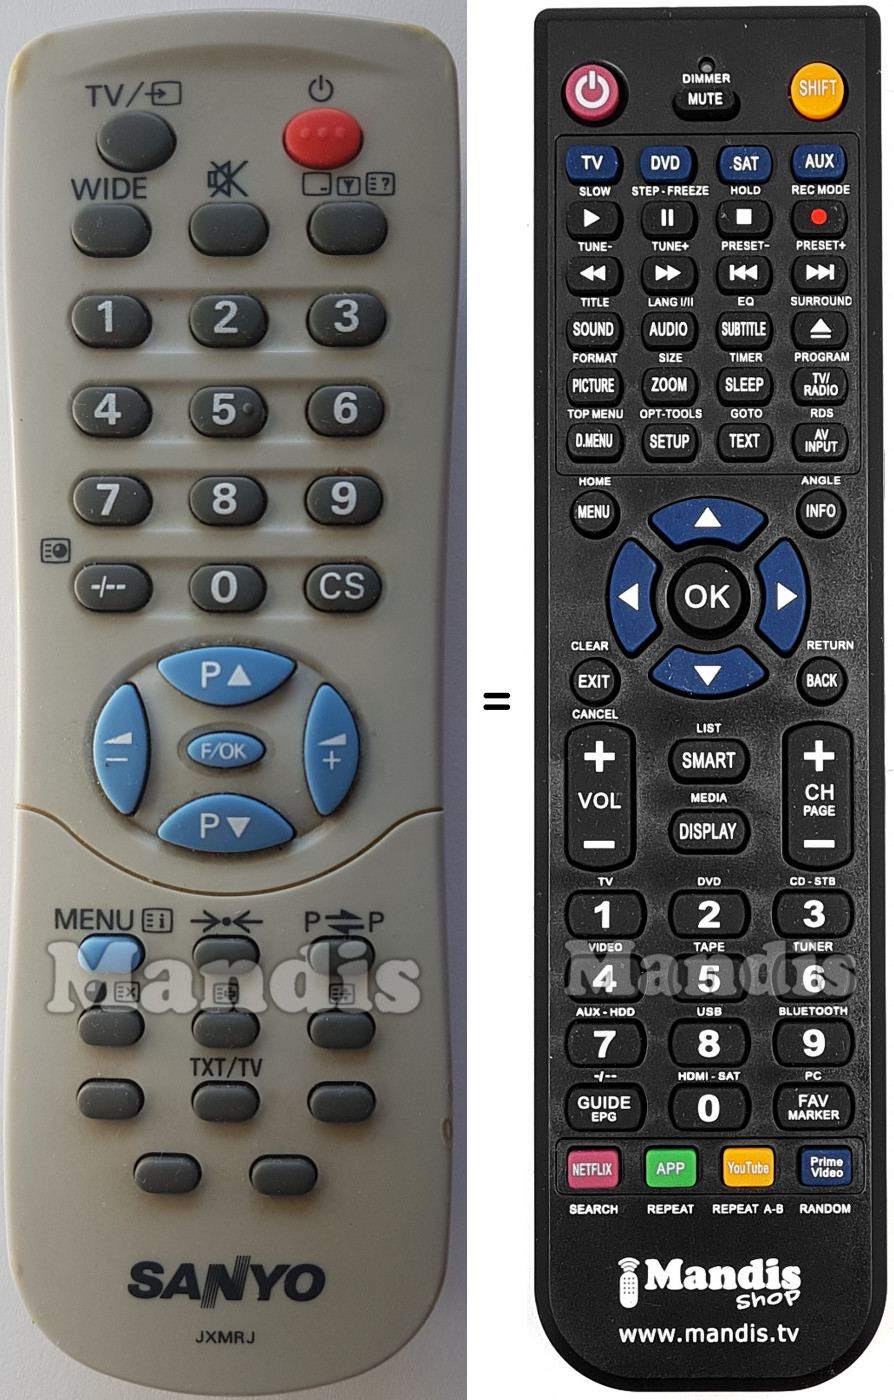 Replacement remote control JXMRJ